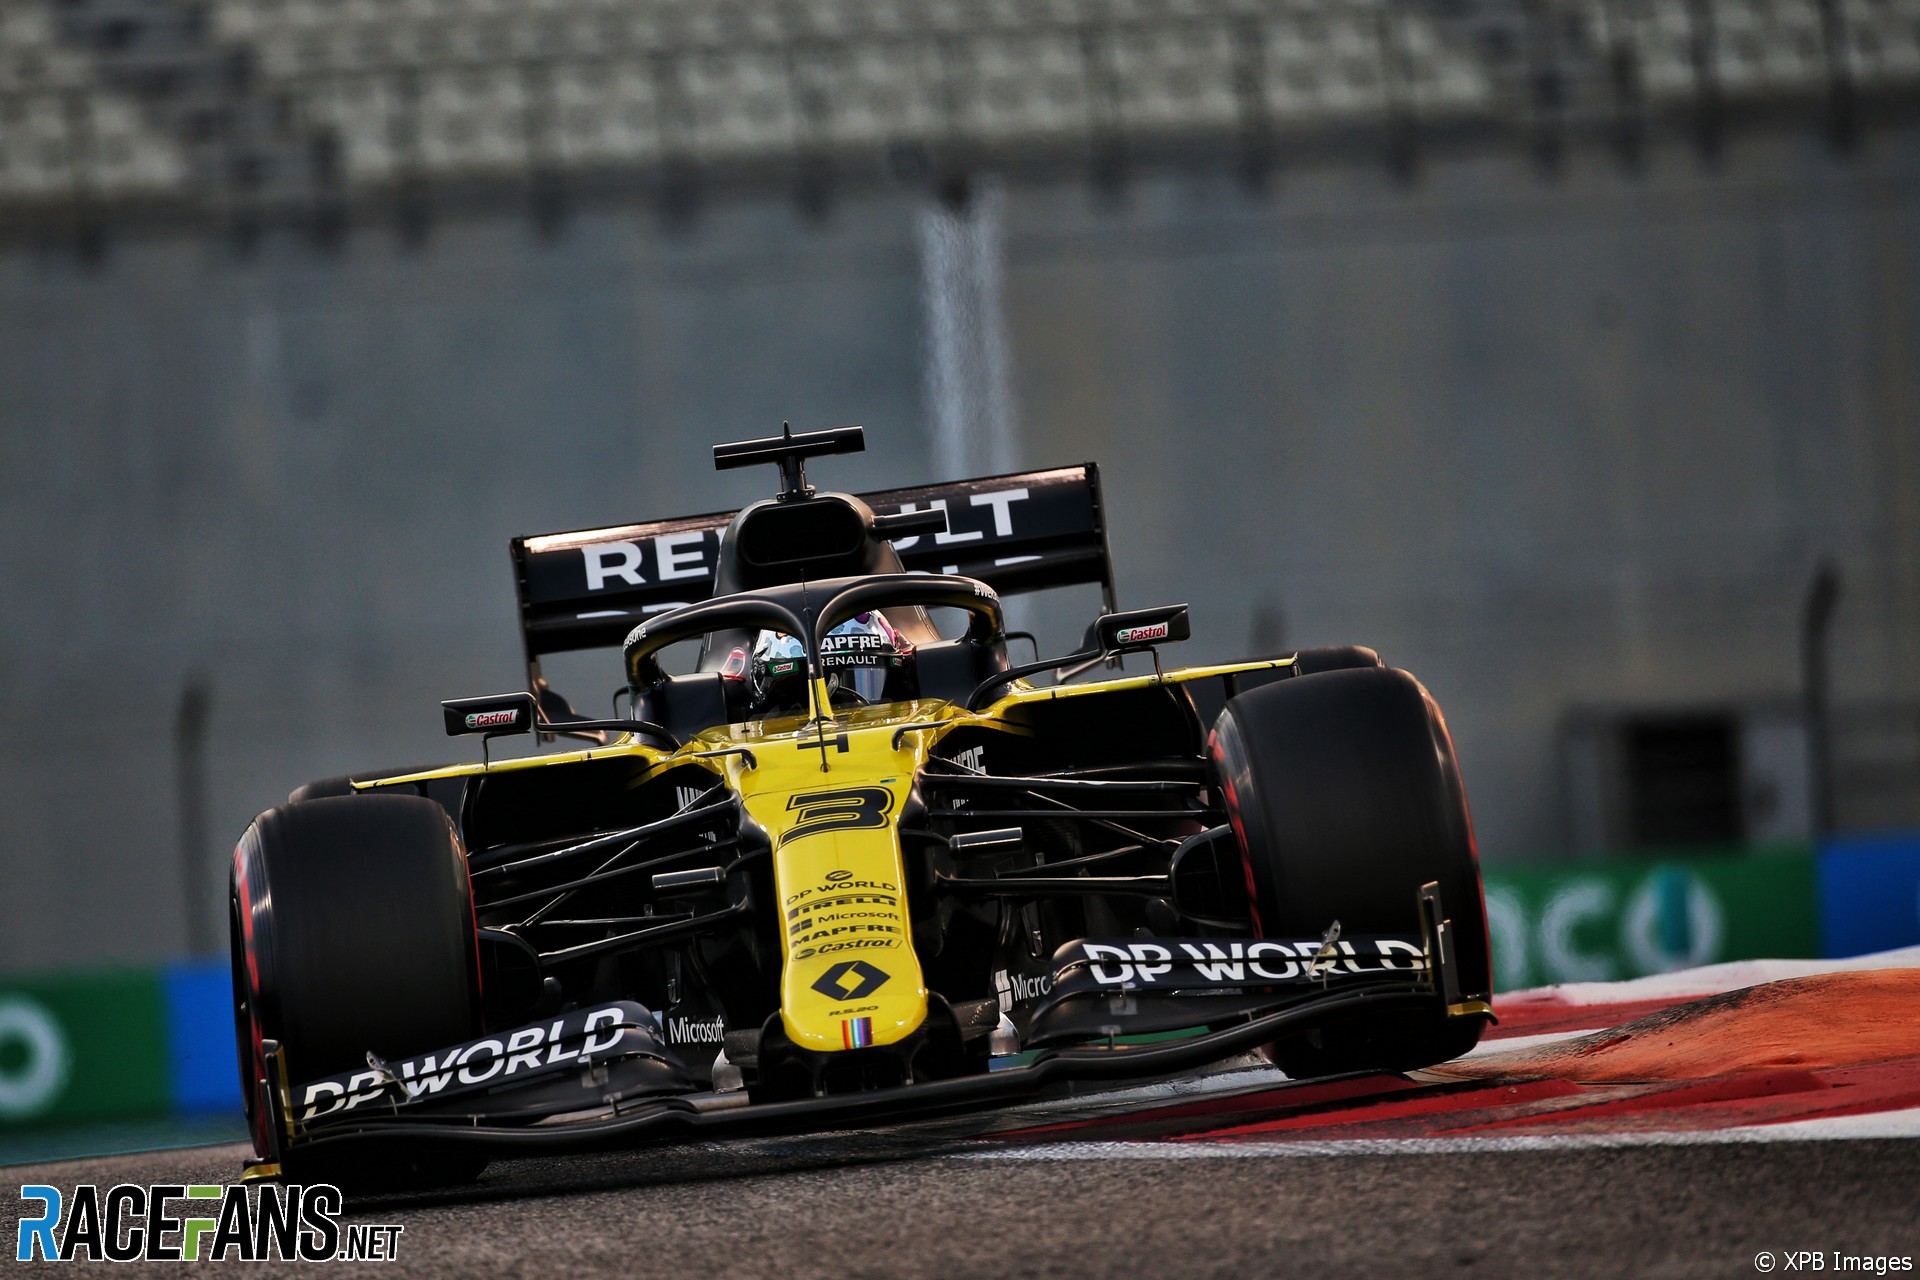 Daniel Ricciardo, Renault, Yas Marina, 2020